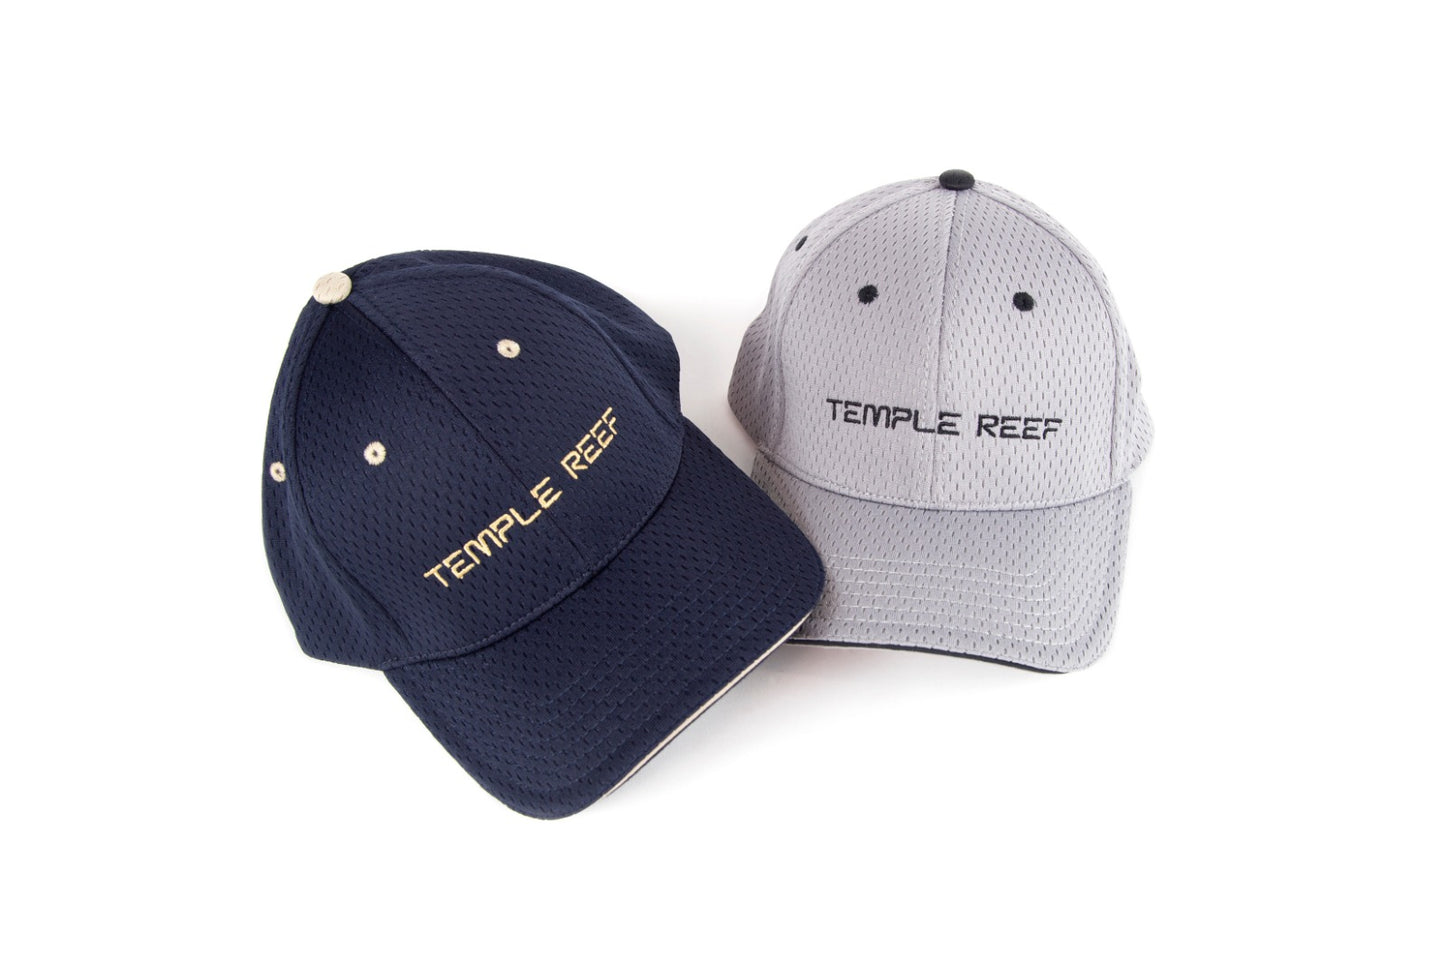 Temple Reef Mesh cap